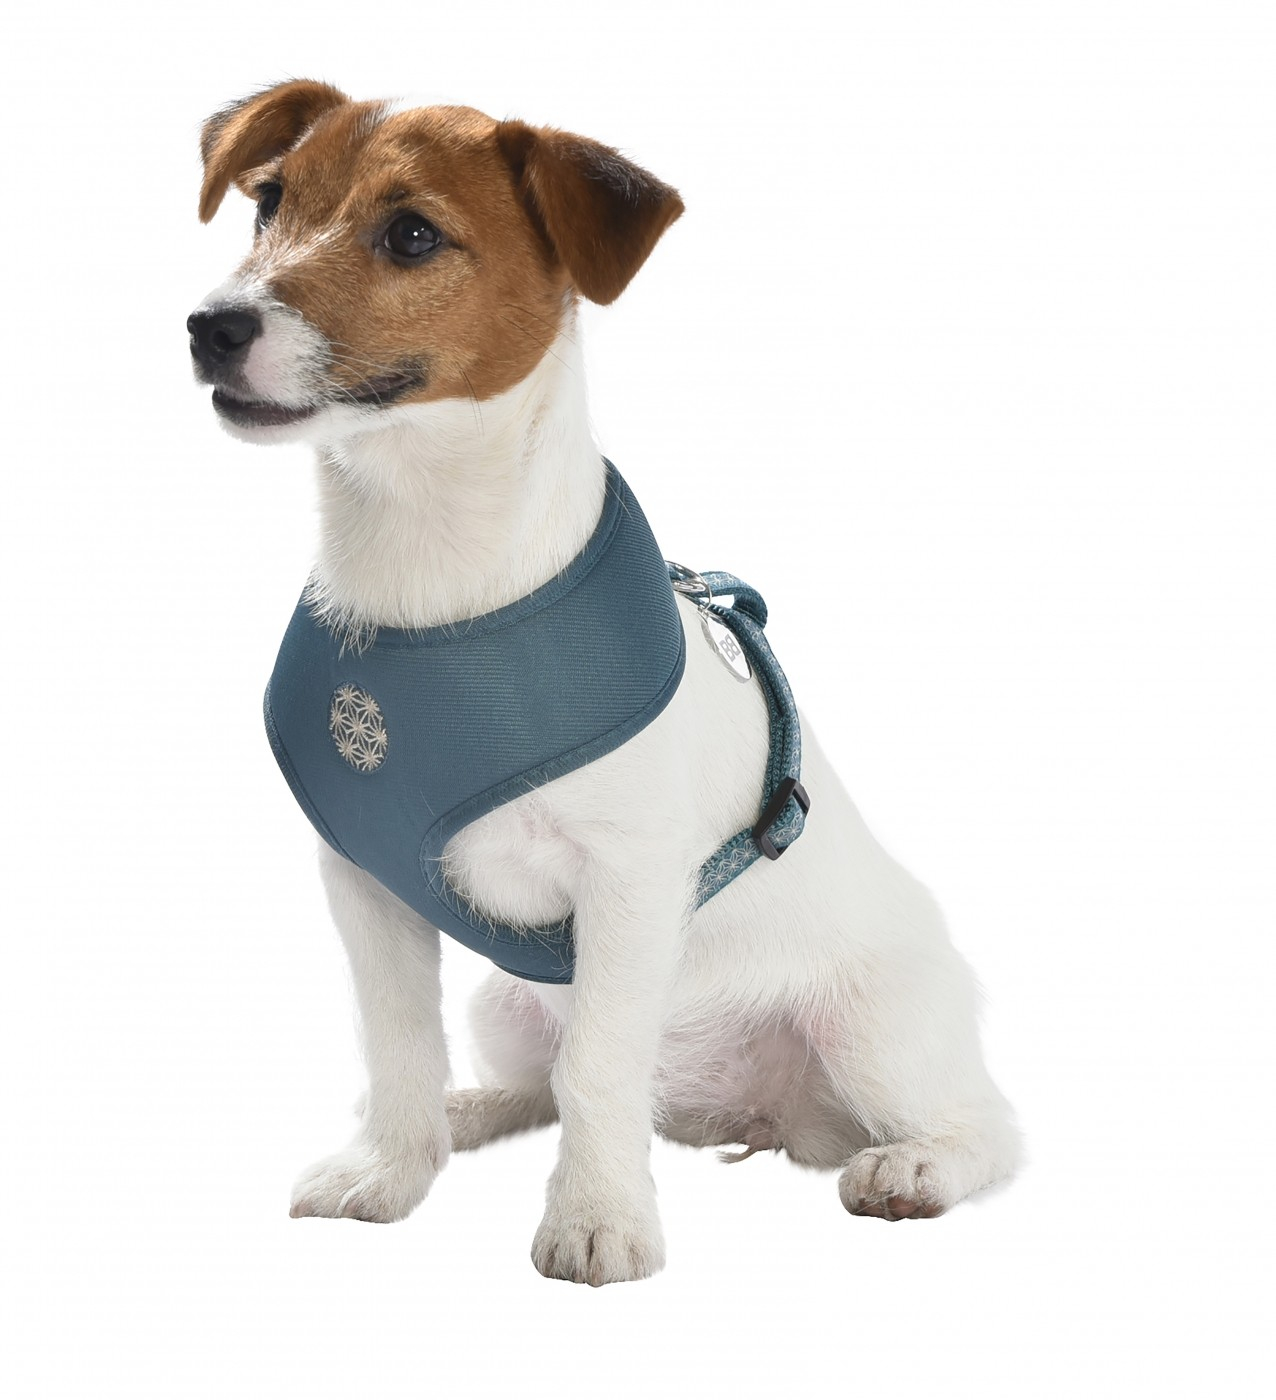 Arnés Camiseta Asanoha BOBBY para perros pequeños - Varios colores disponibles